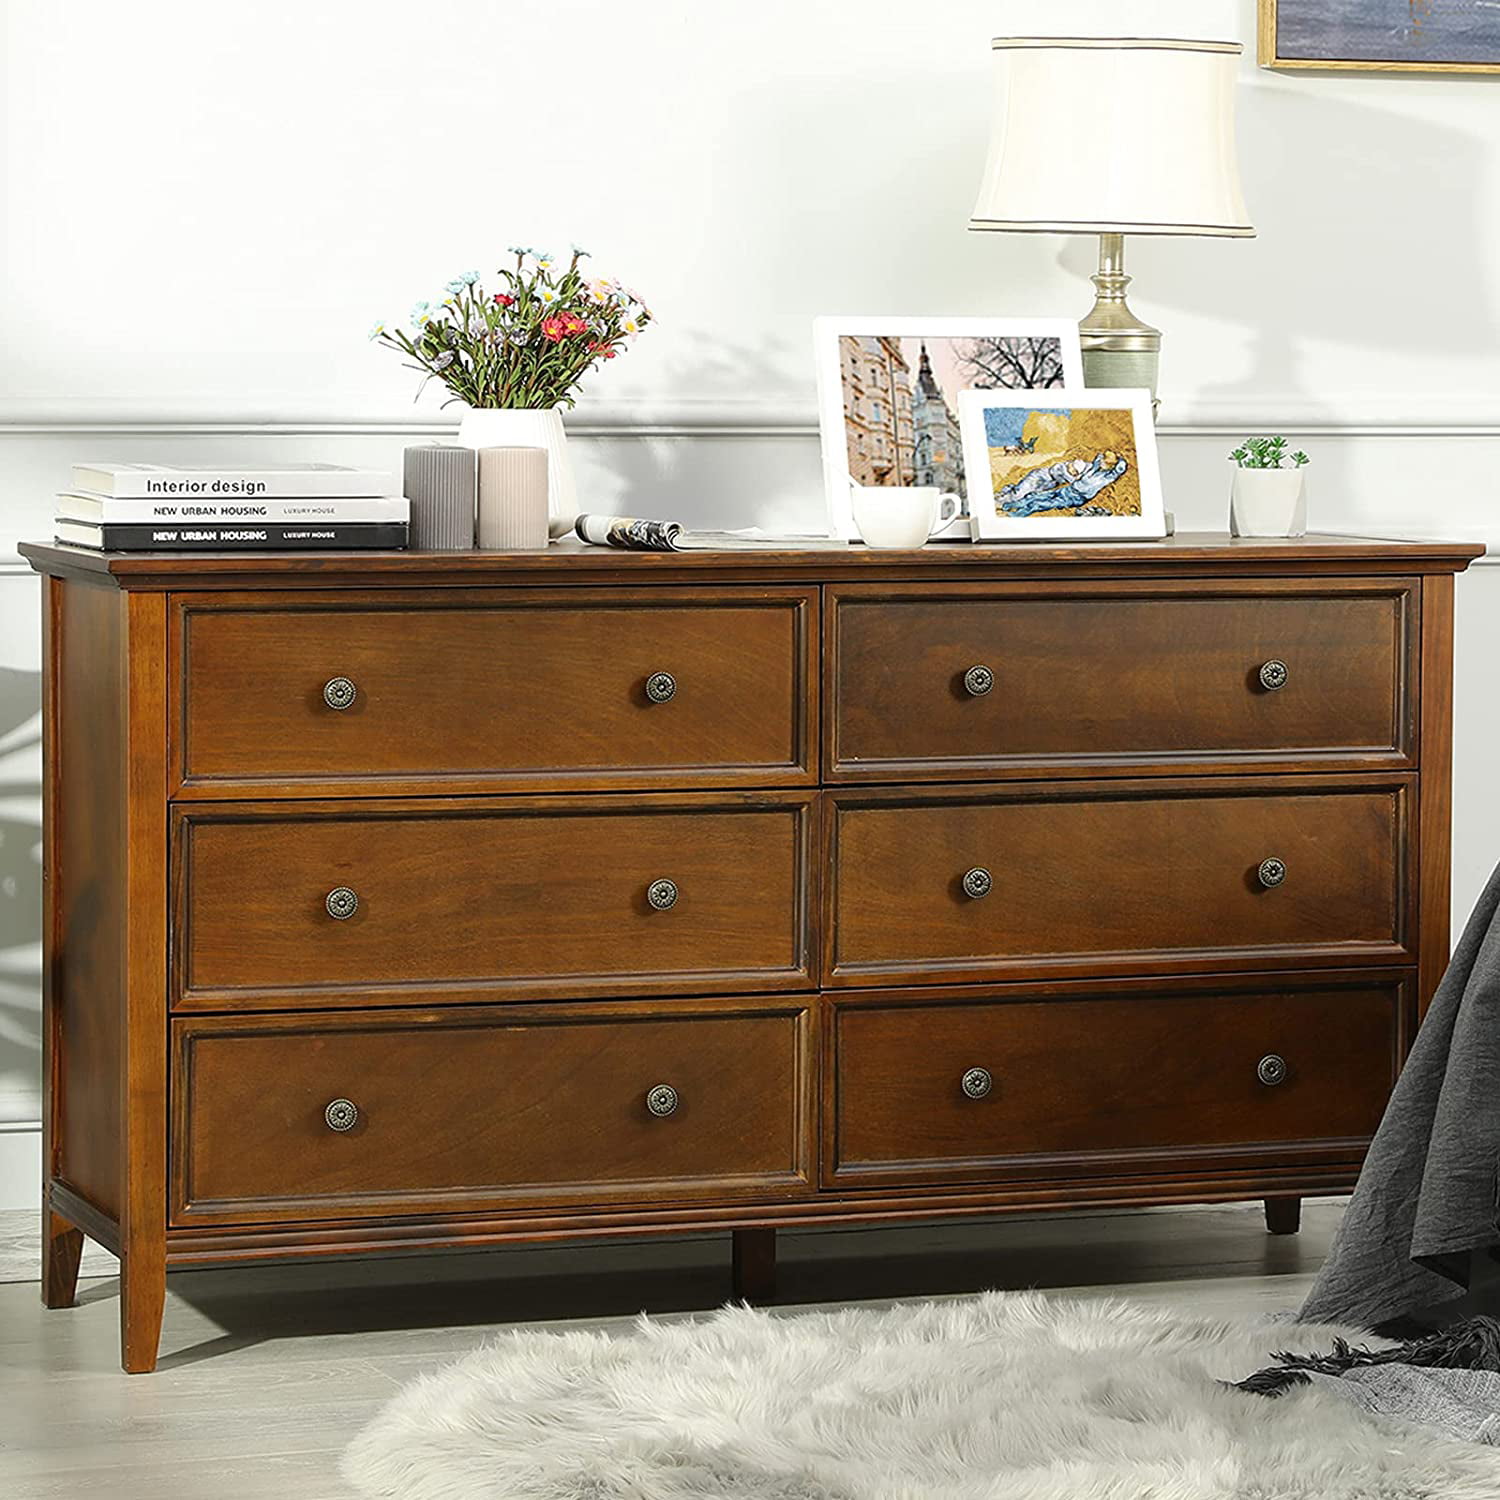 Hasuit 6 Drawer Double Dresser, Solid Wood Dresser Chest